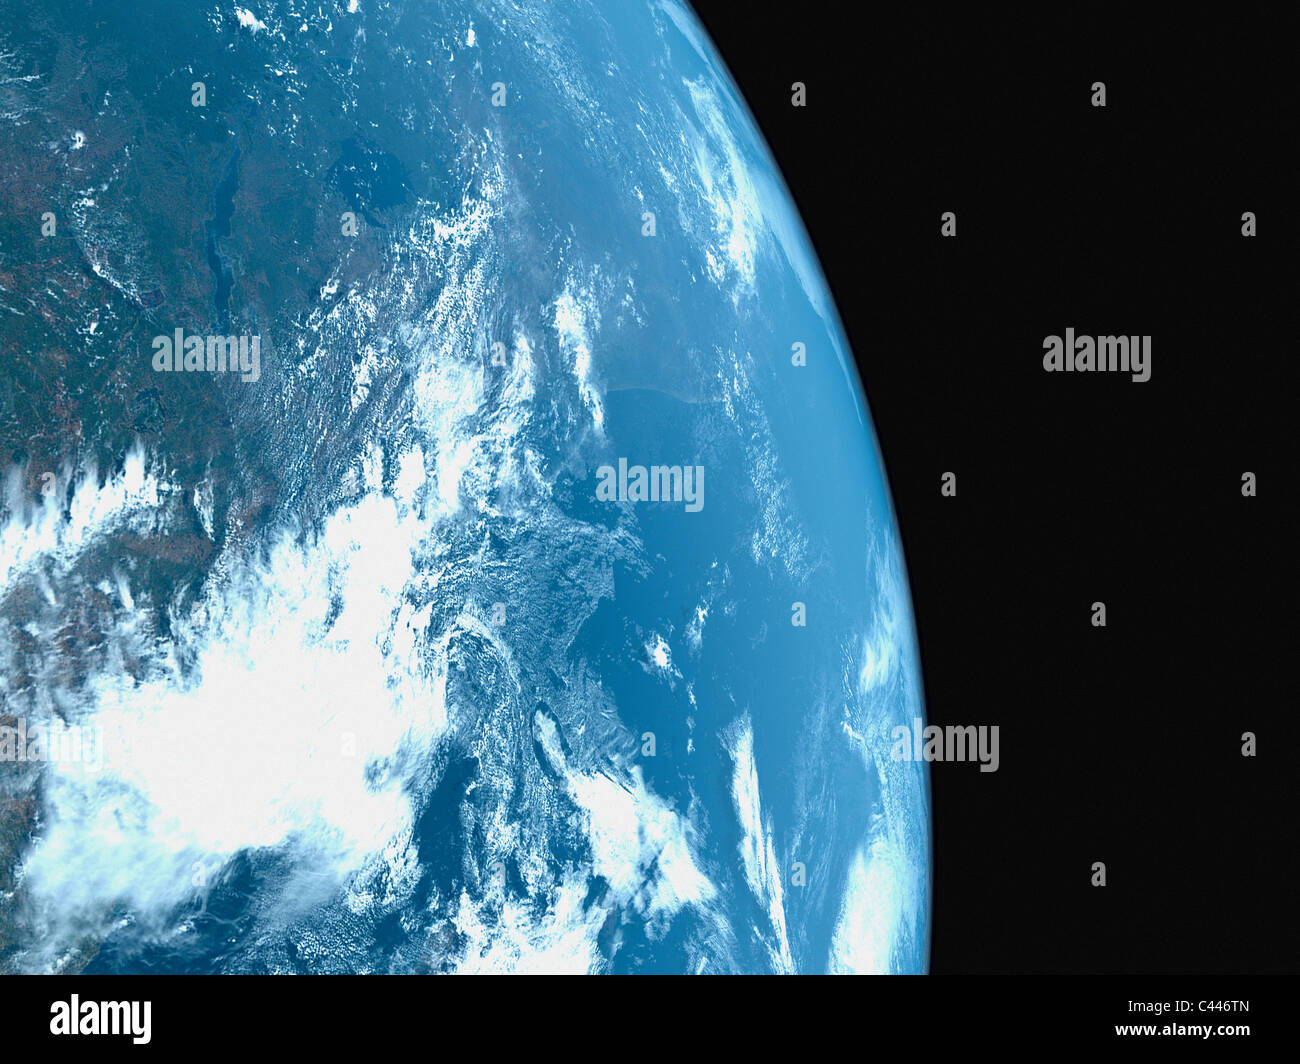 Planet earth, satellite view Stock Photo